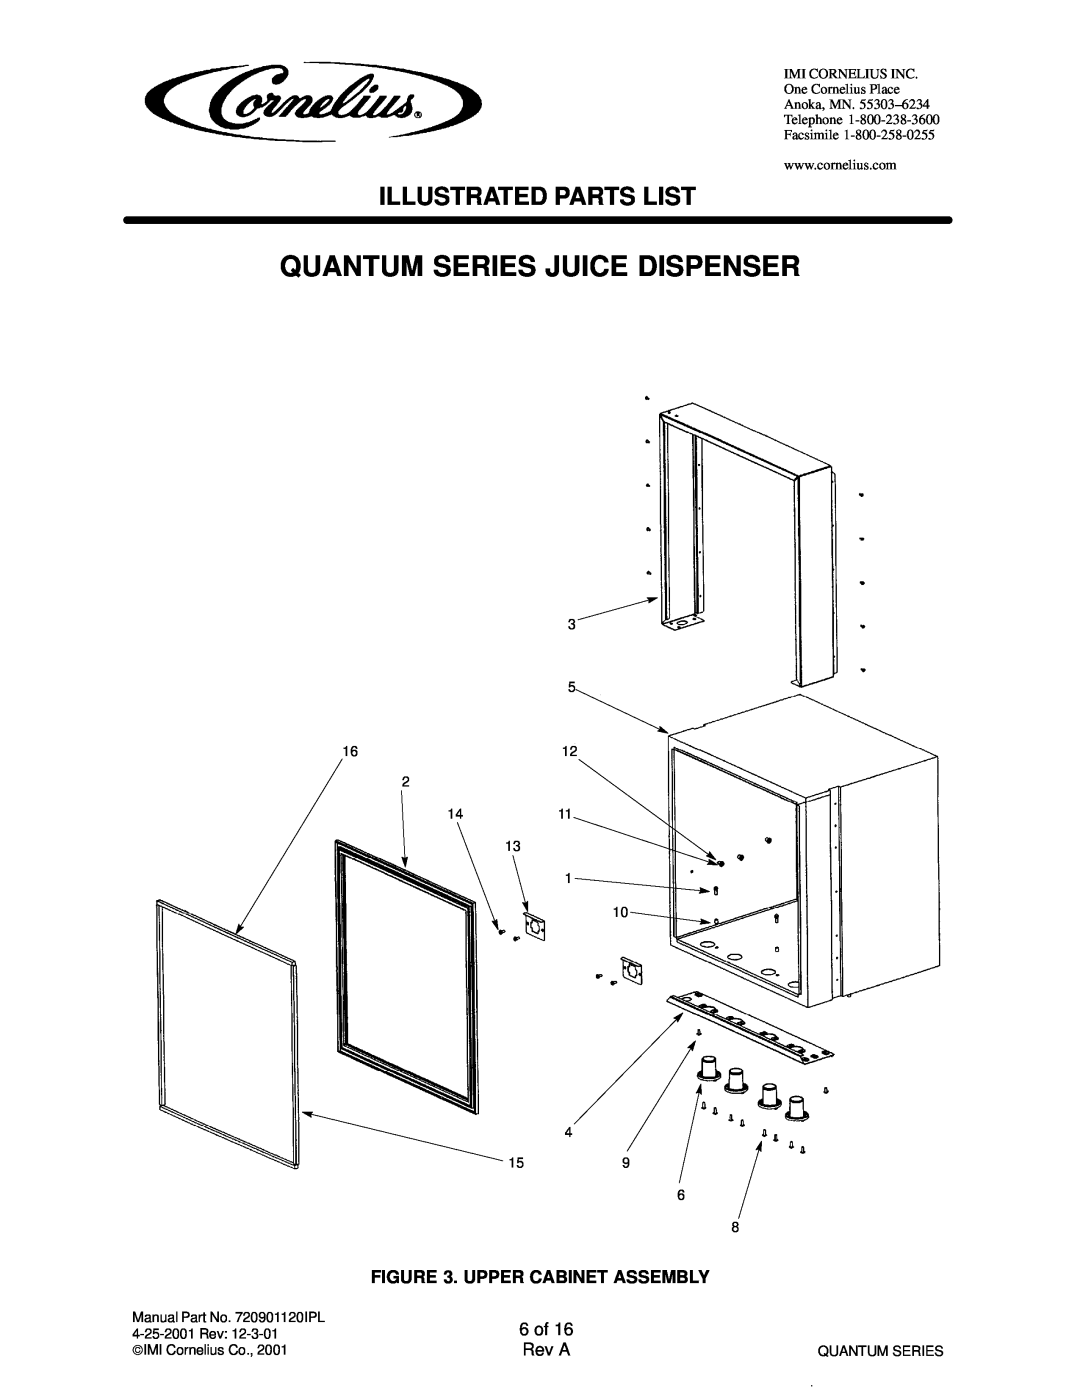 Panasonic 45200102, 45200103 Quantum Series Juice Dispenser, Illustrated Parts List, Upper Cabinet Assembly, 6 of, Rev A 